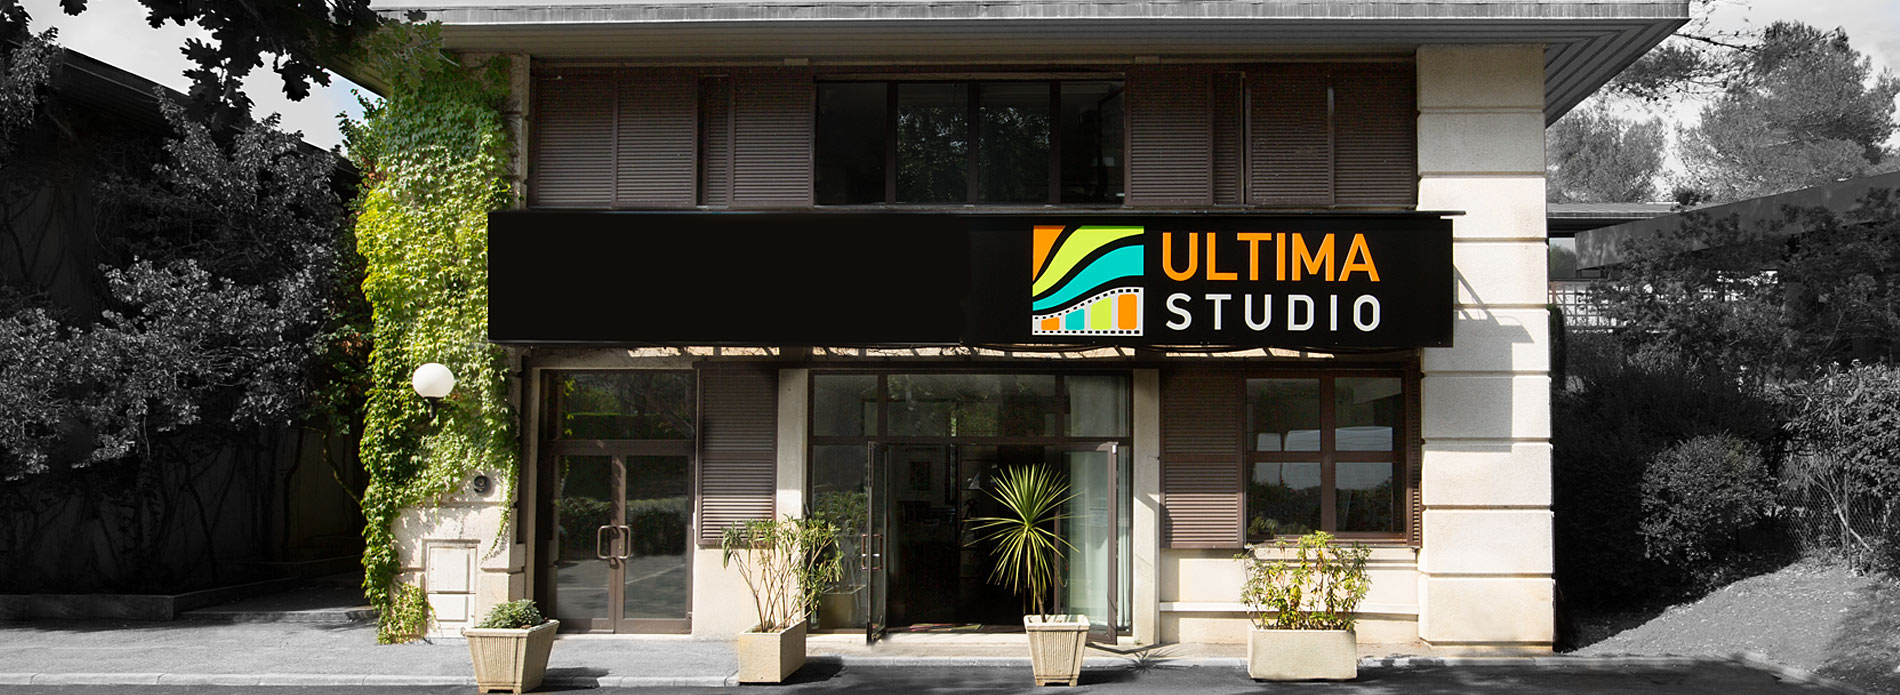 Ultima Studio Facade